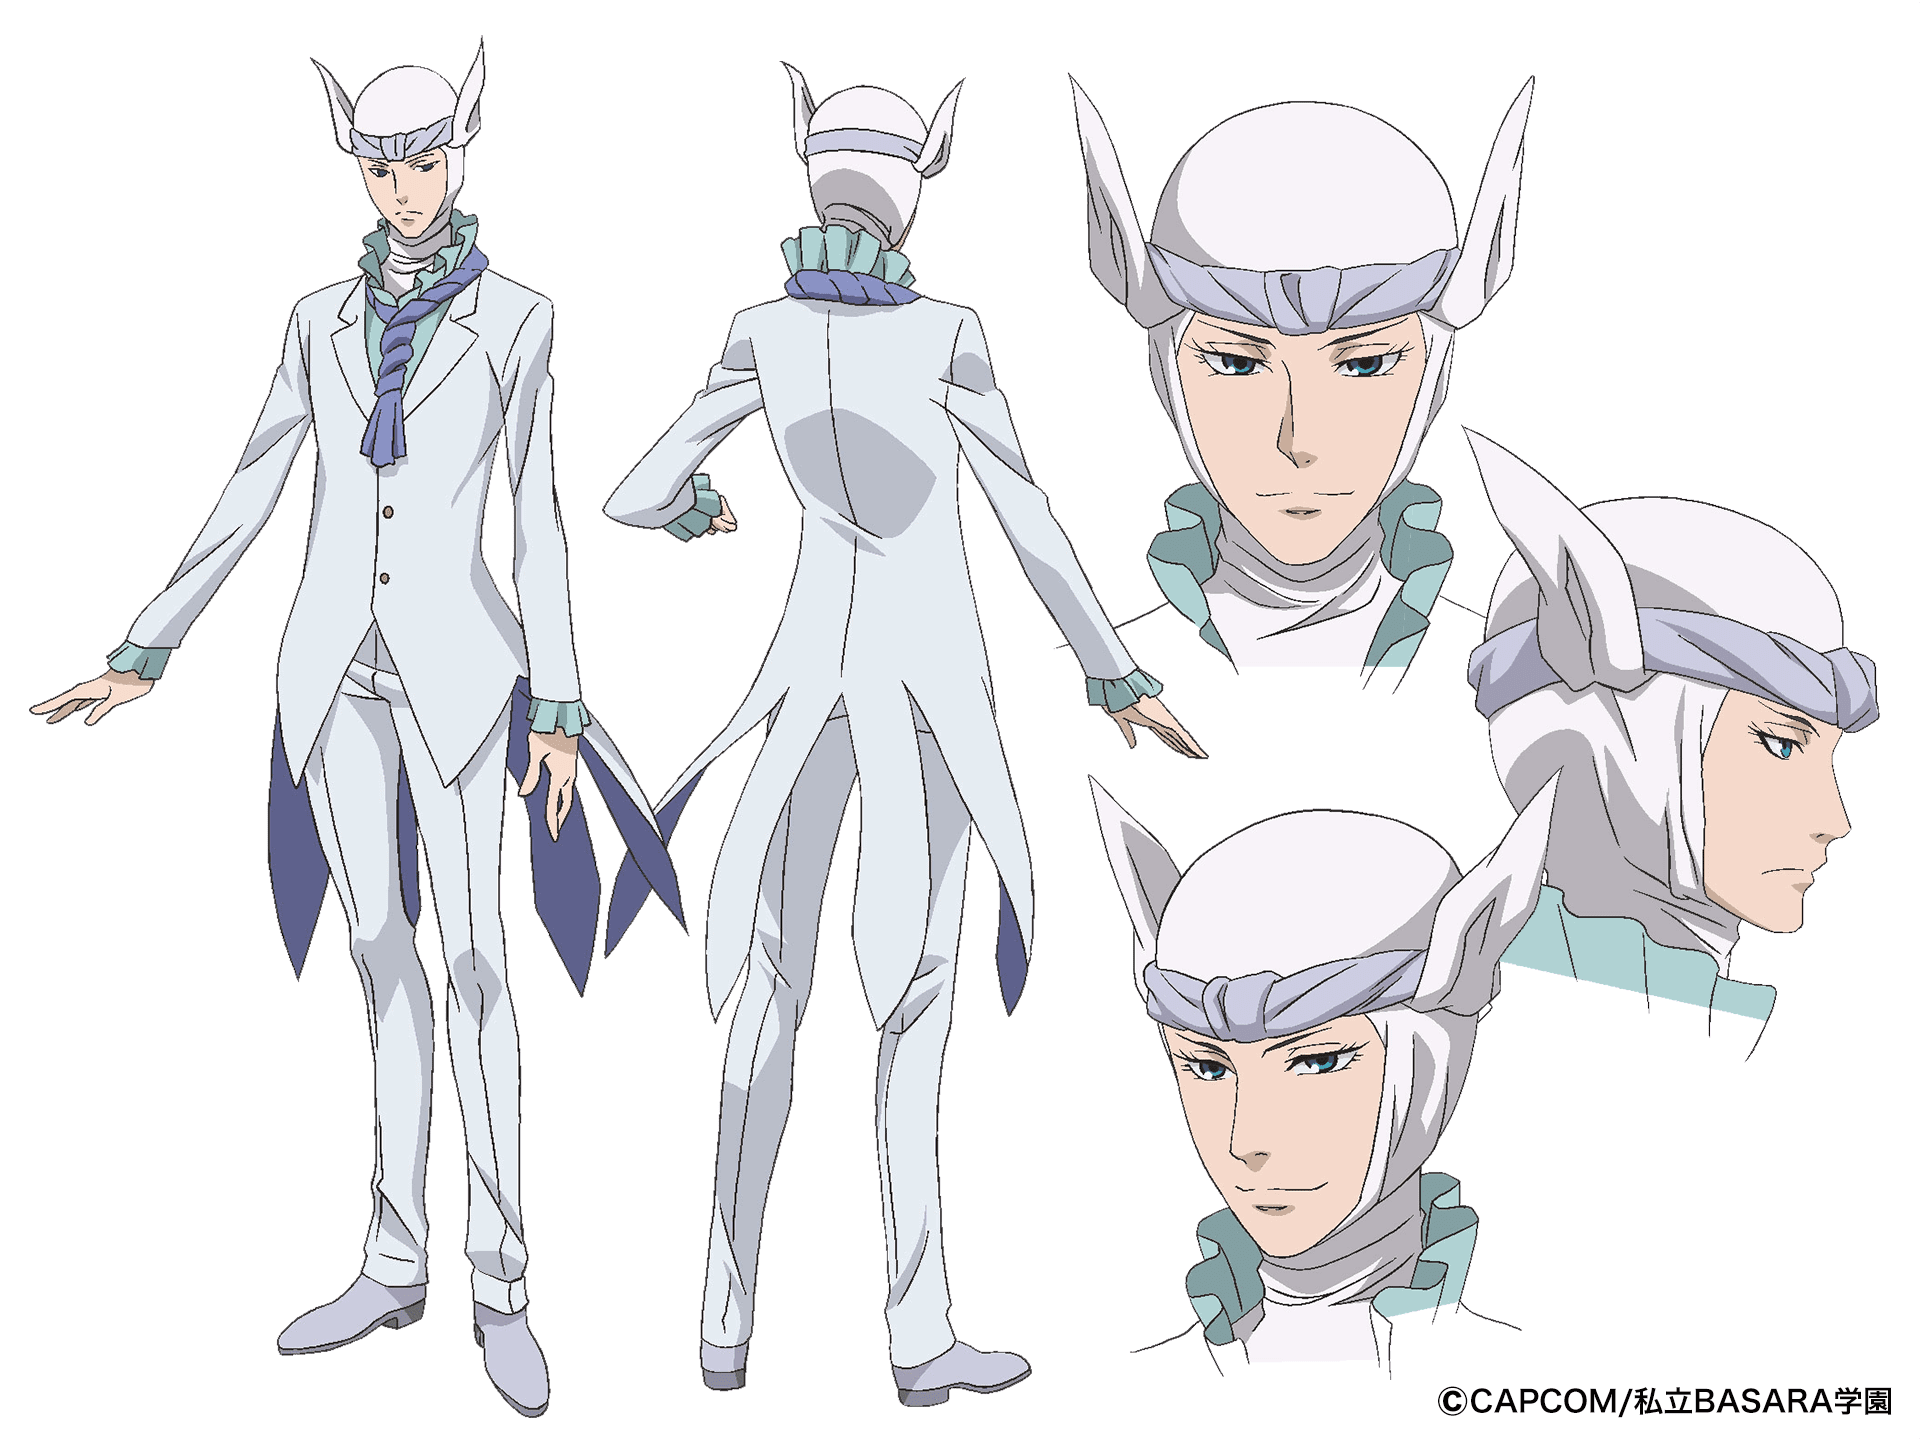 Uesugi, avec un costume blanc immaculé.